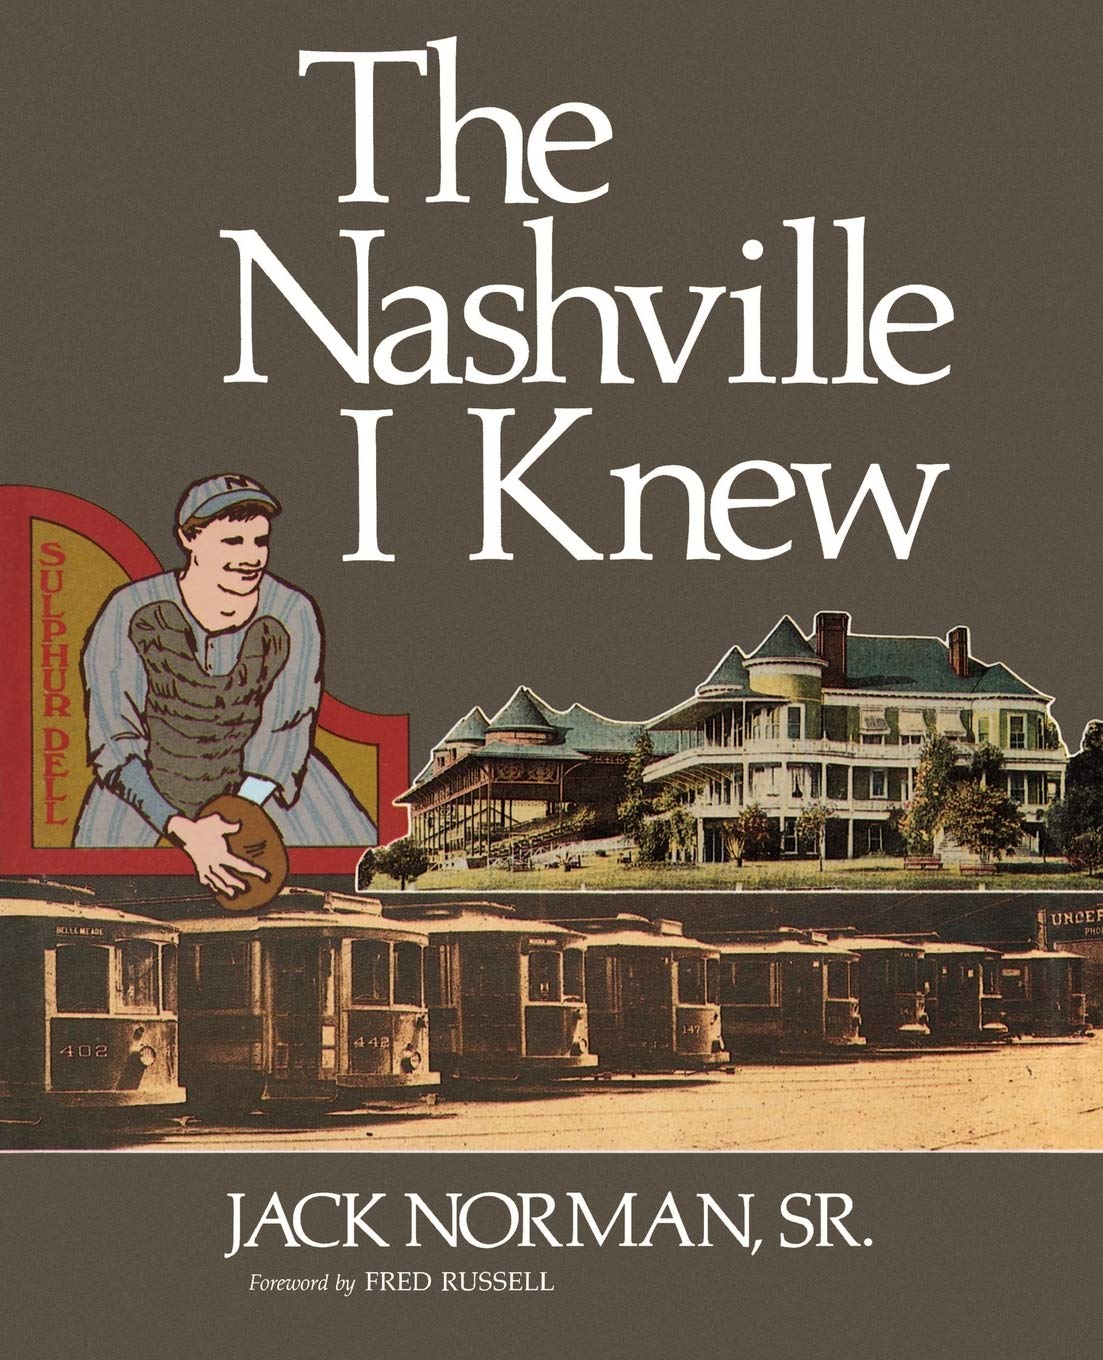 The Nashville I Knew